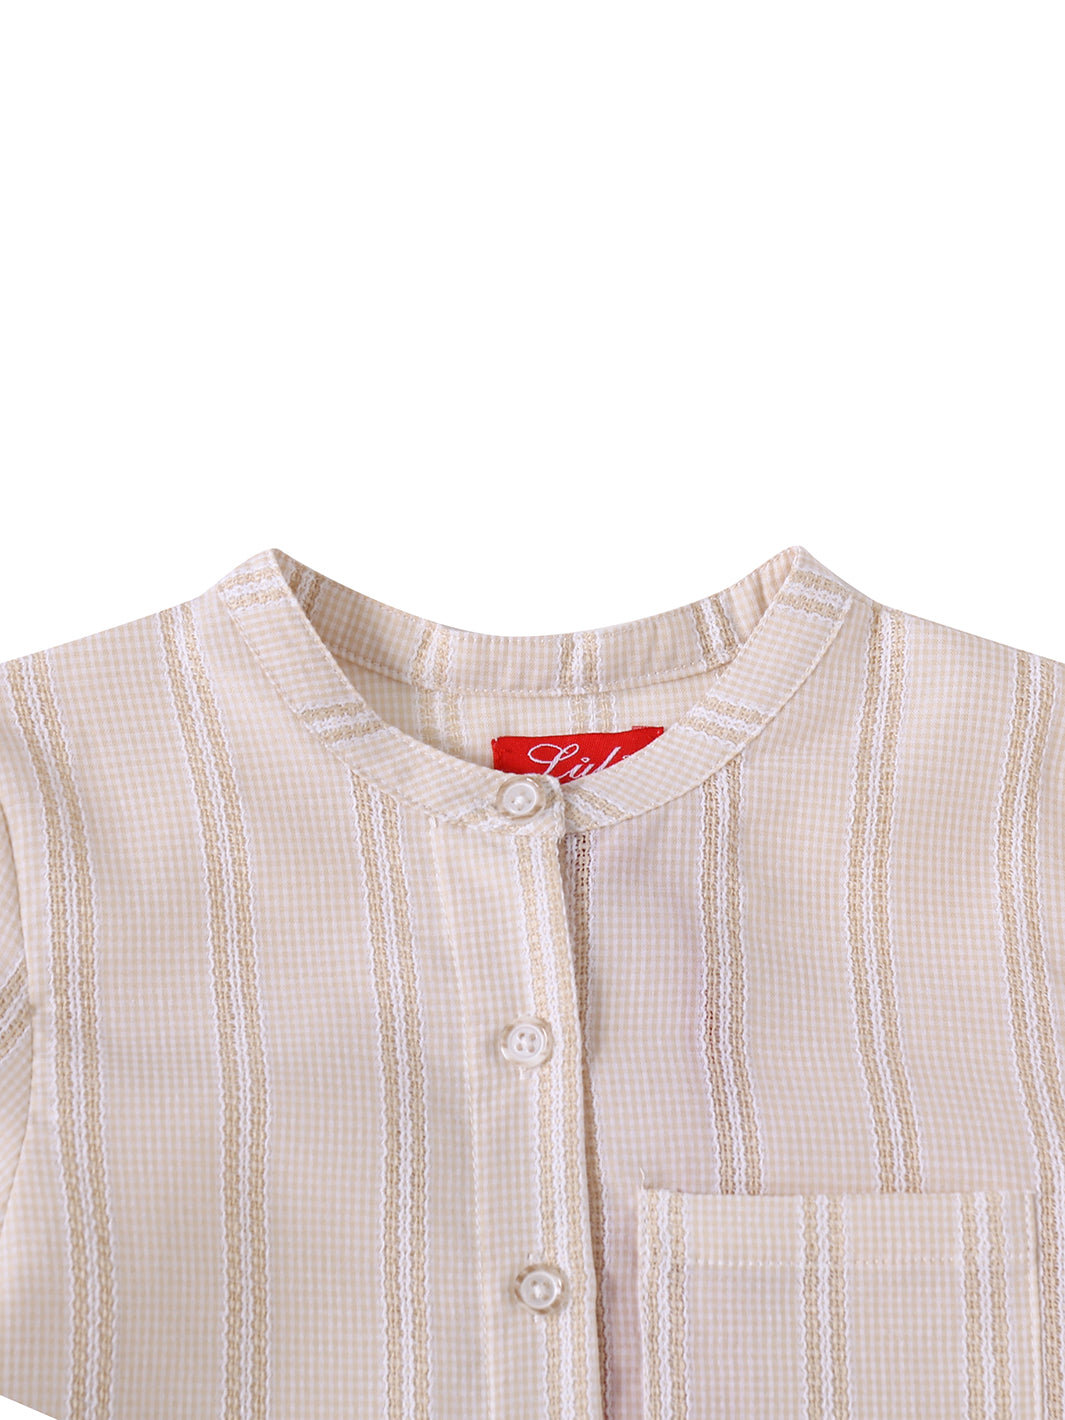 Gingham Crochet Striped Shirt - Beige